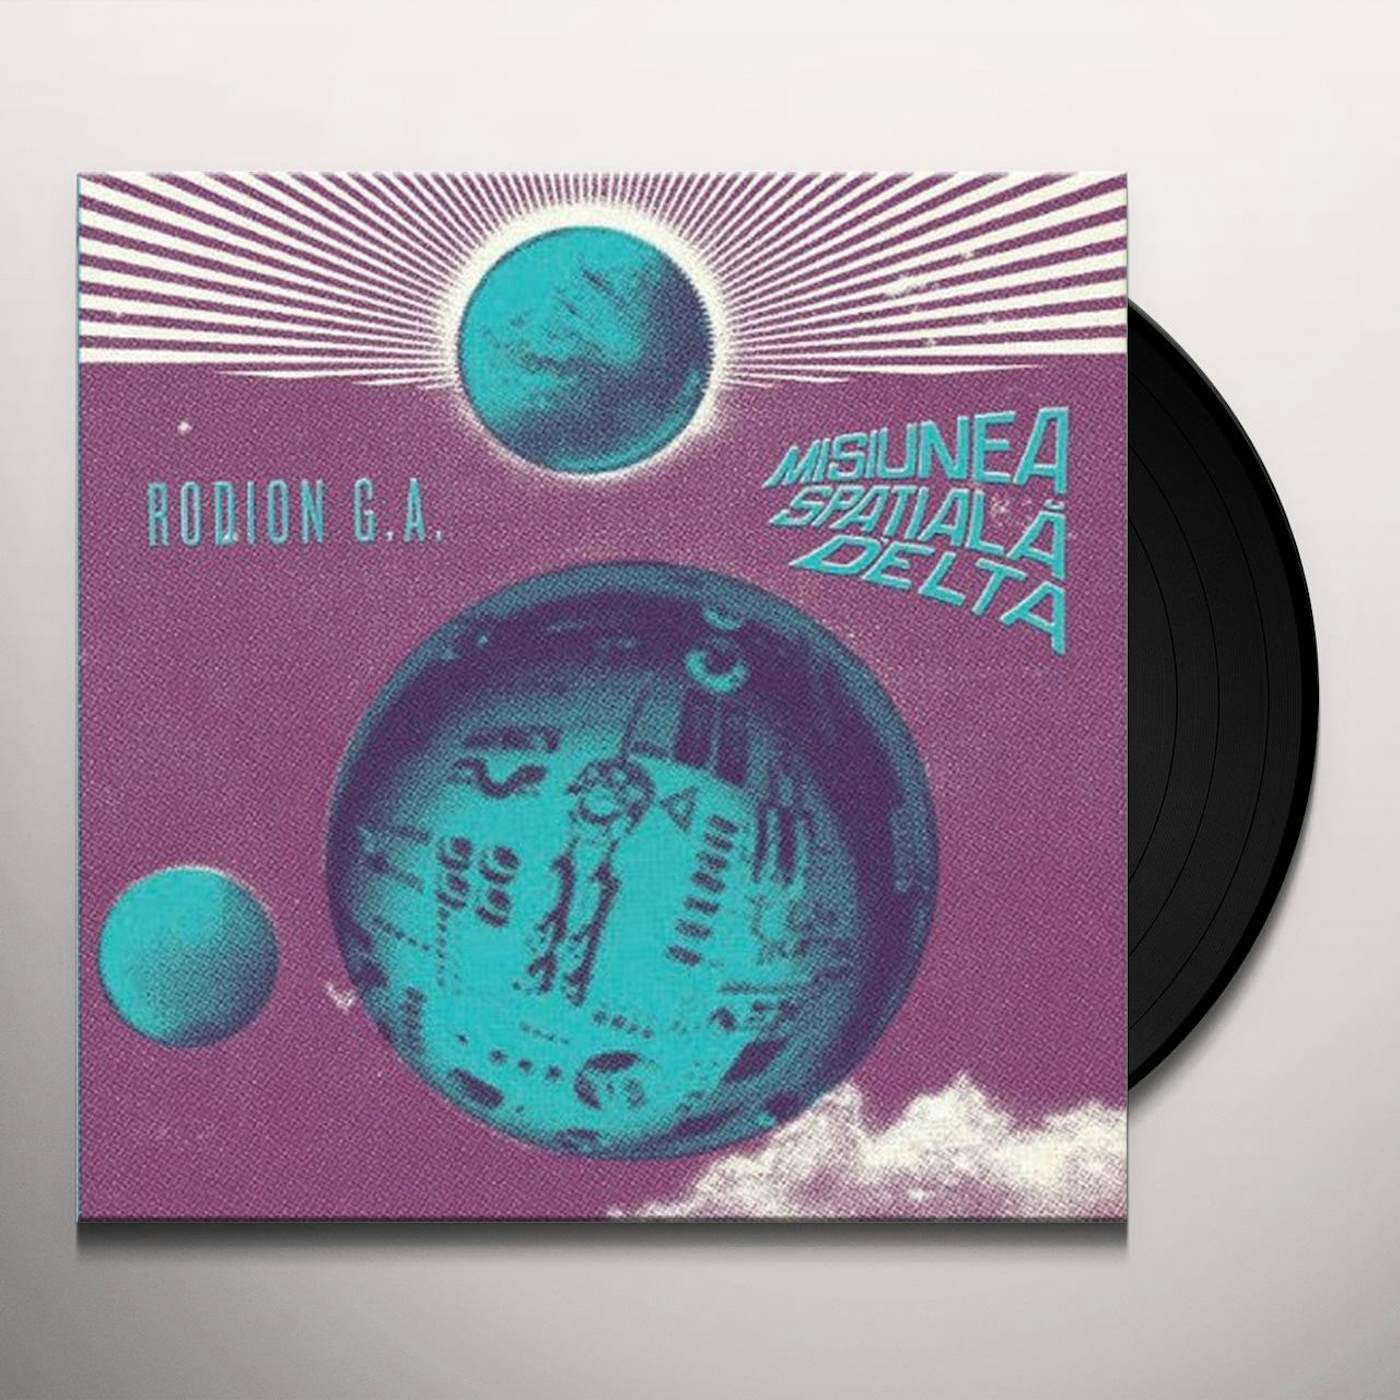 Rodion G.A. MISUINEA SPATIALA DELTA (DELTA SPACE MISSION) (Vinyl)